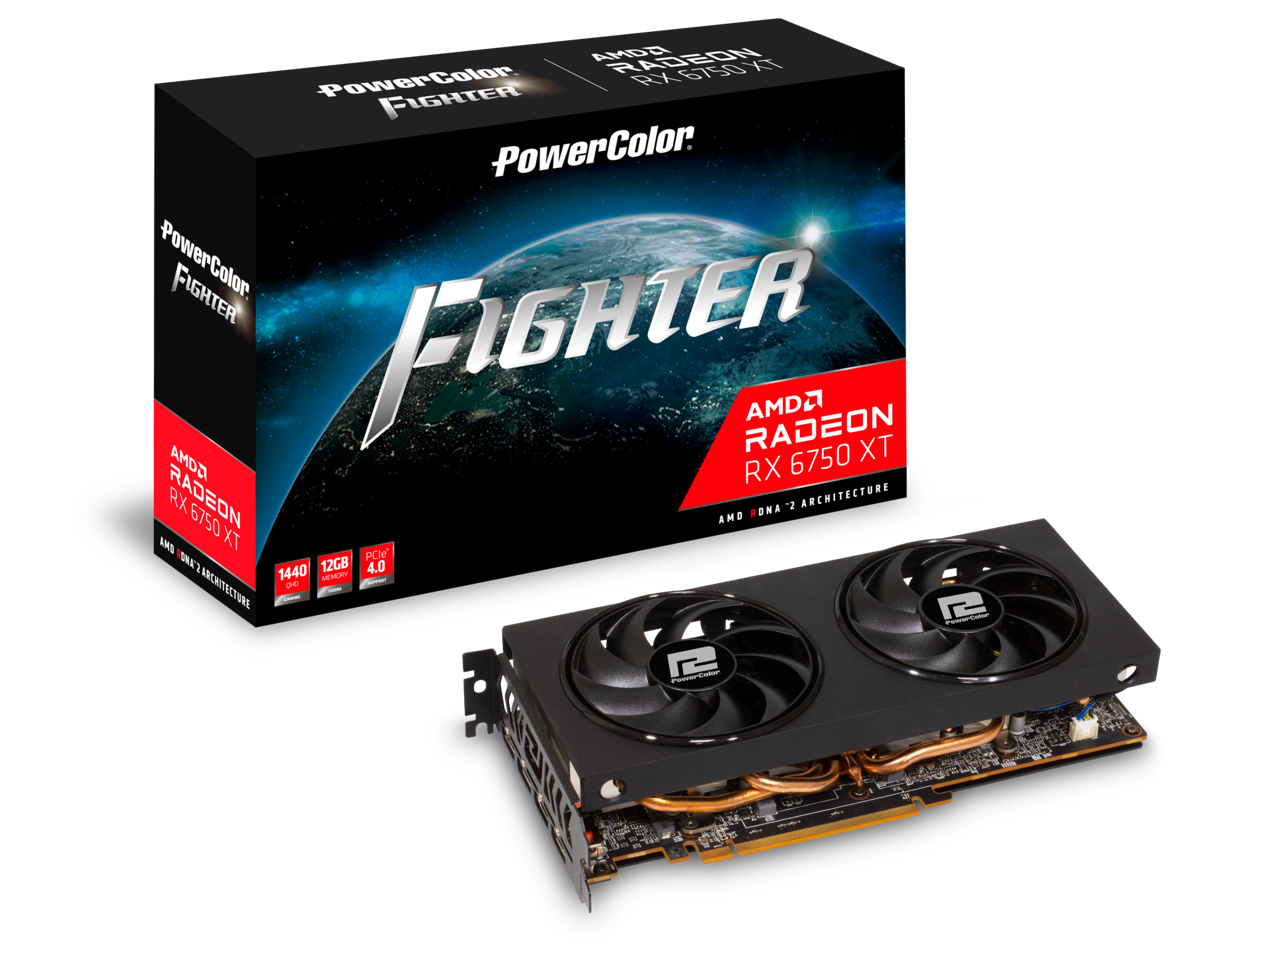 PowerColor Fighter Radeon RX 6750 XT 12GB Desktop Graphics Card $300 + Free Shipping